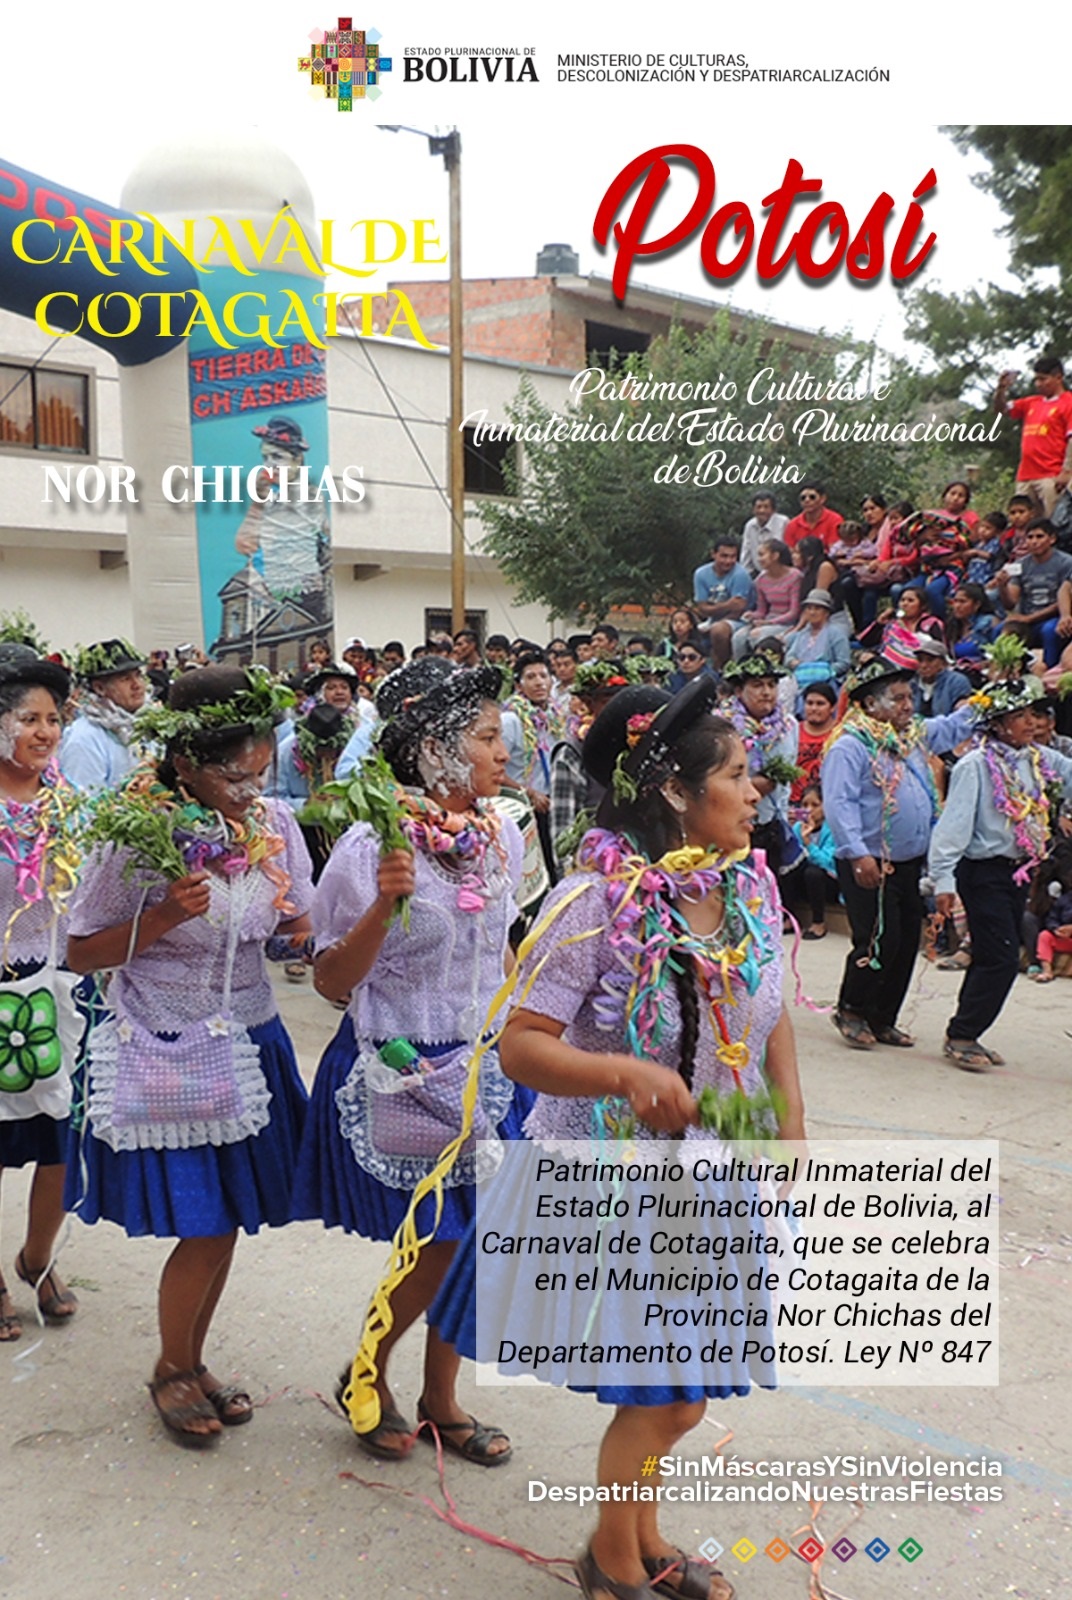 Potosí Carnaval Cotagaita - Potosí Carnaval Cotagaita